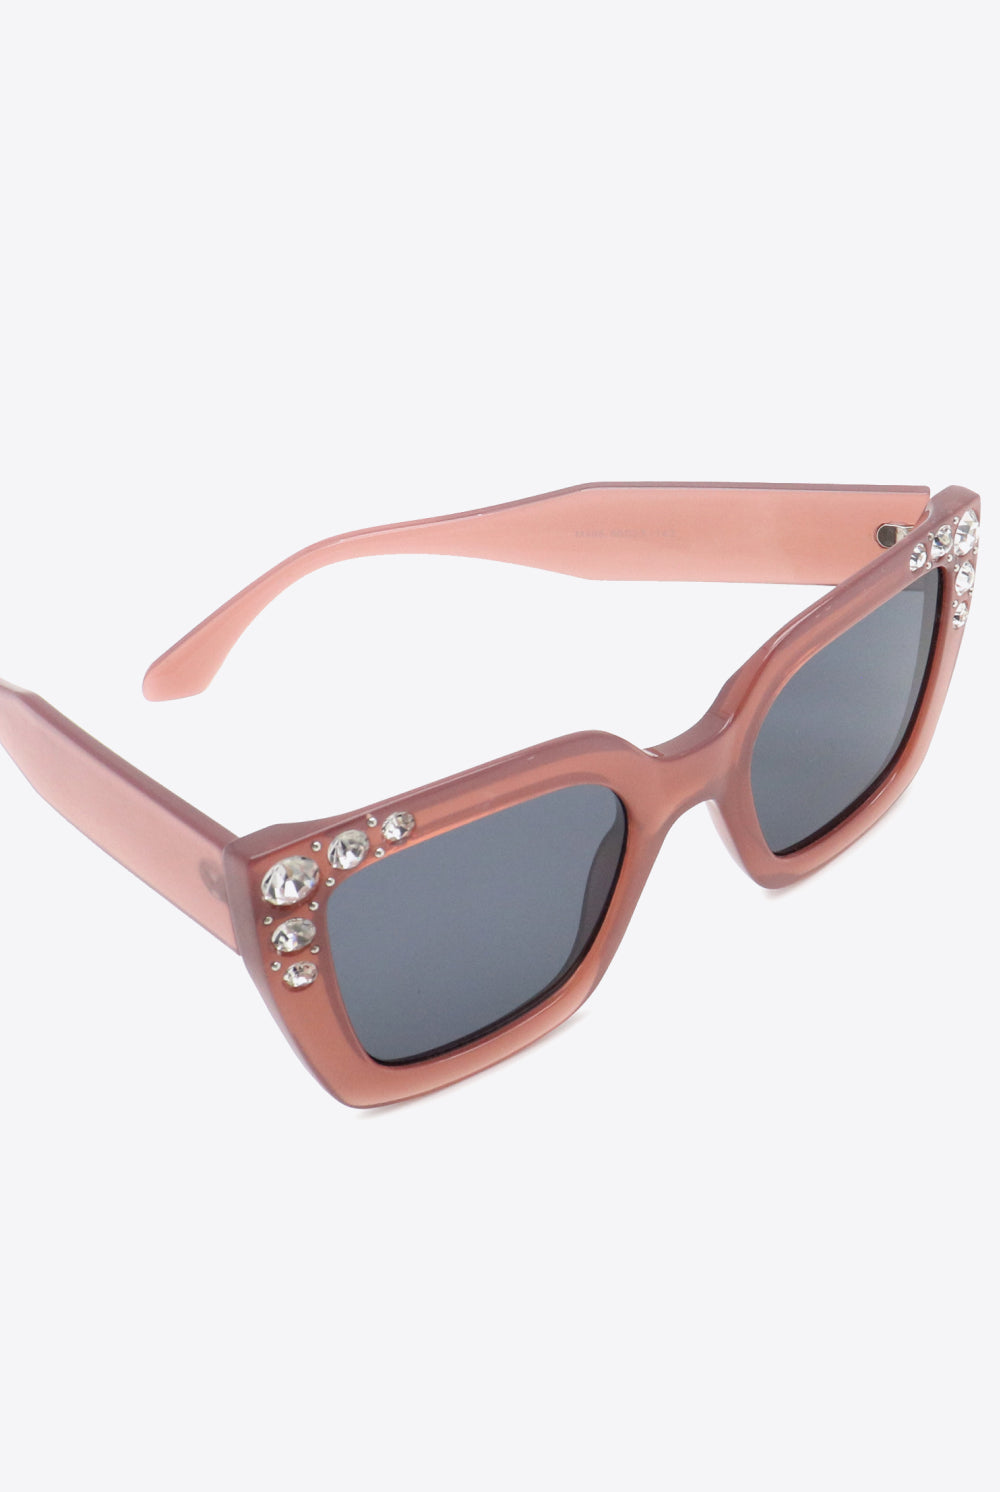 White Smoke Inlaid Rhinestone Polycarbonate Sunglasses Sunglasses